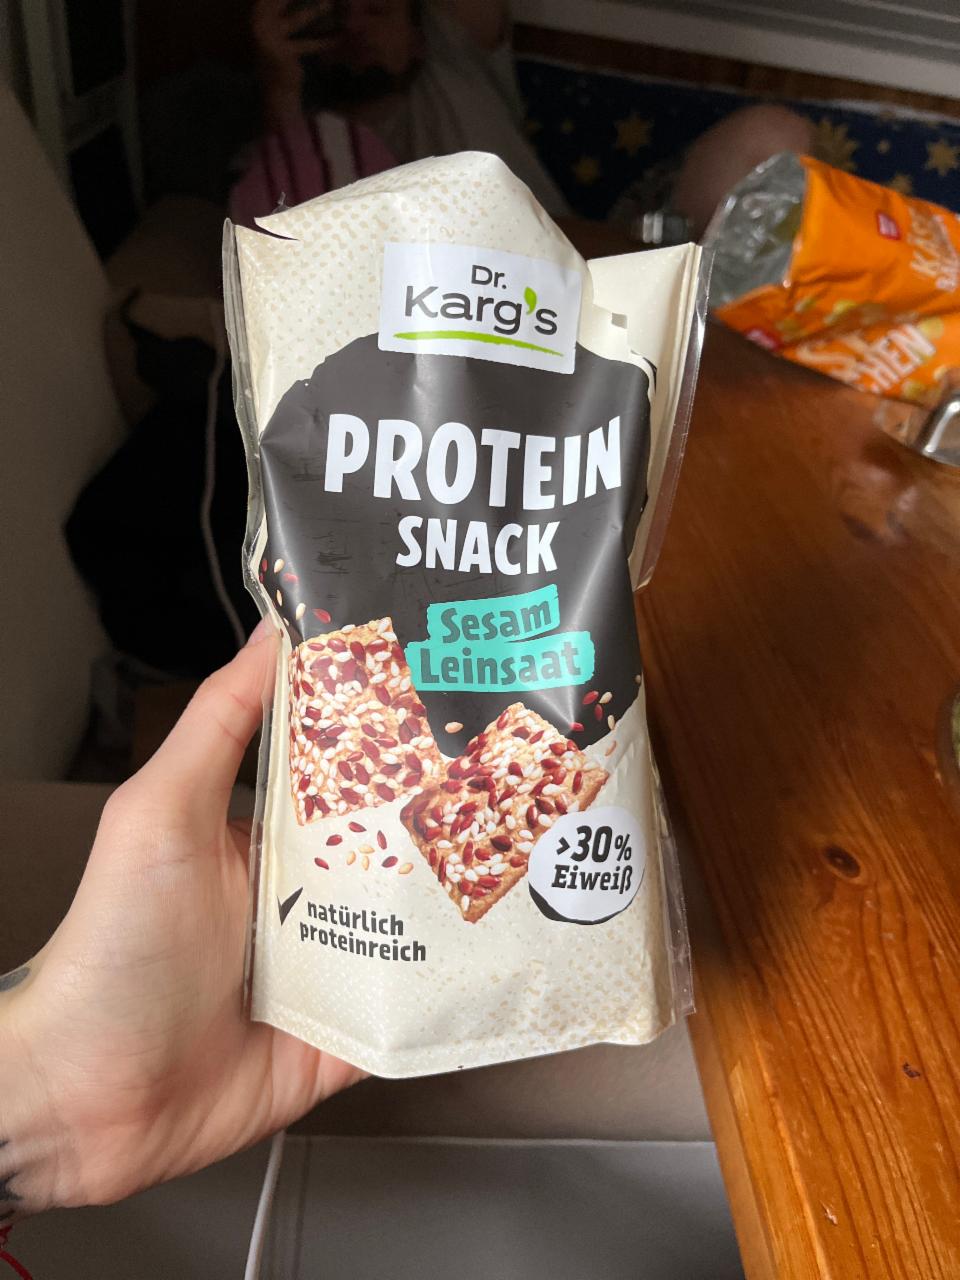 Фото - Sesam leinsaat Protein Snack Karg's